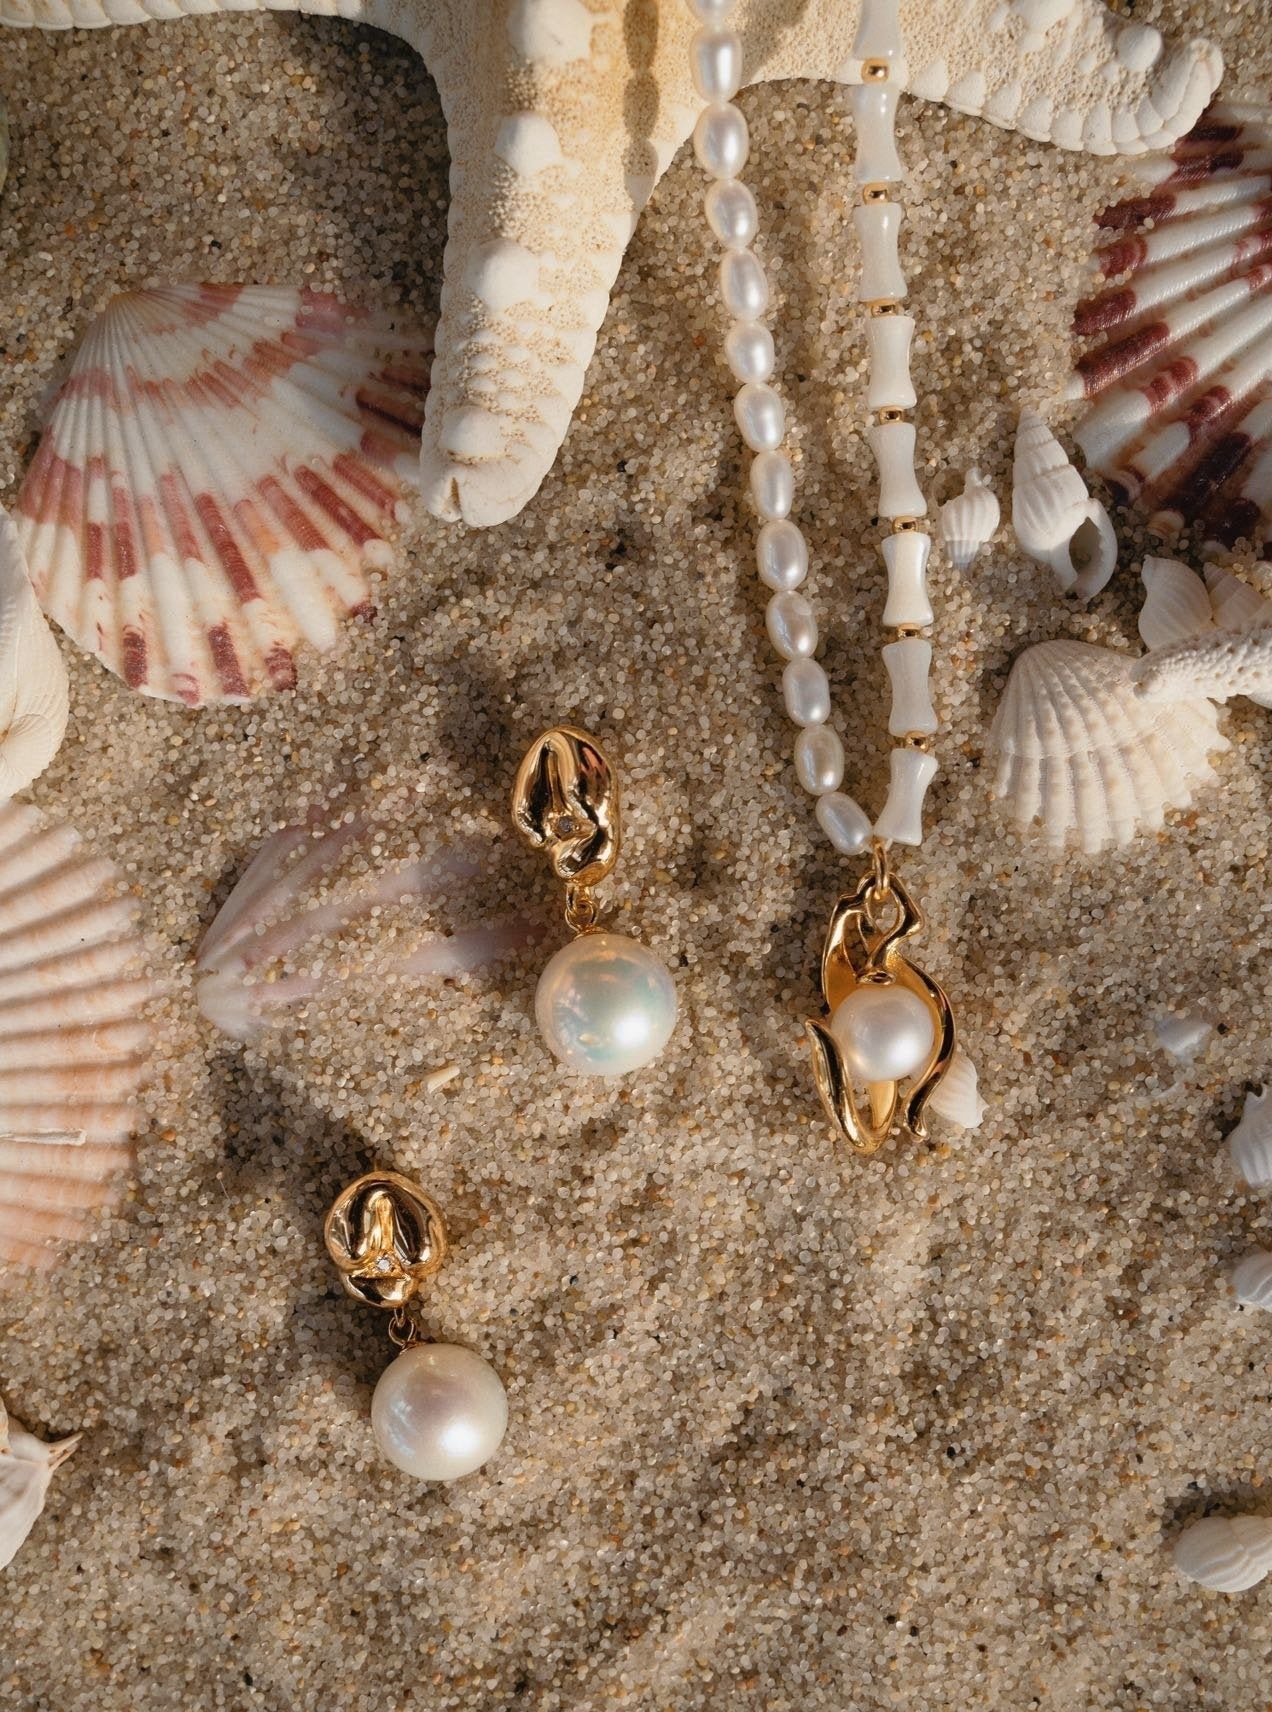 Asymmetrical Textured Pearl Earrings with Zircon Accents | earrings | 925earrings, _badge_S925, earrings, Pearl, Pearl Earrings, s925, simsmore | SHOPQAQ